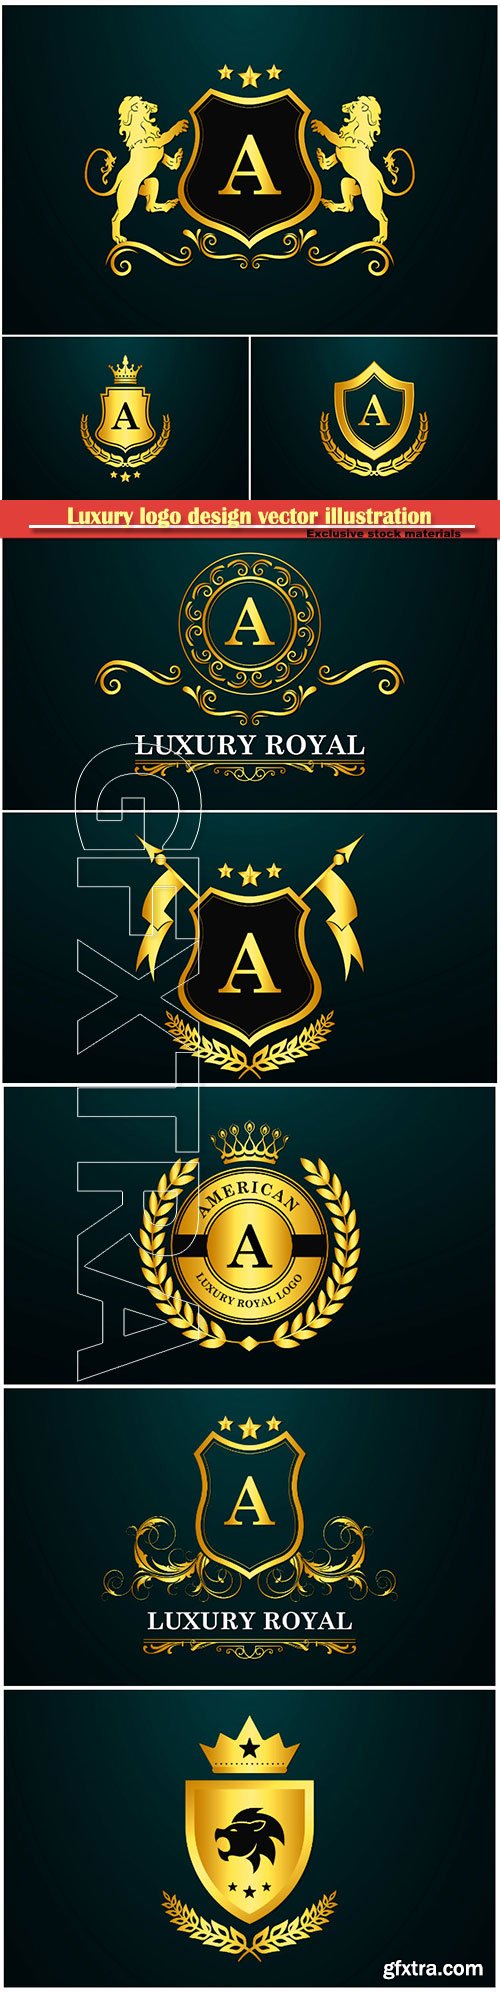 Luxury logo design vector illustration template